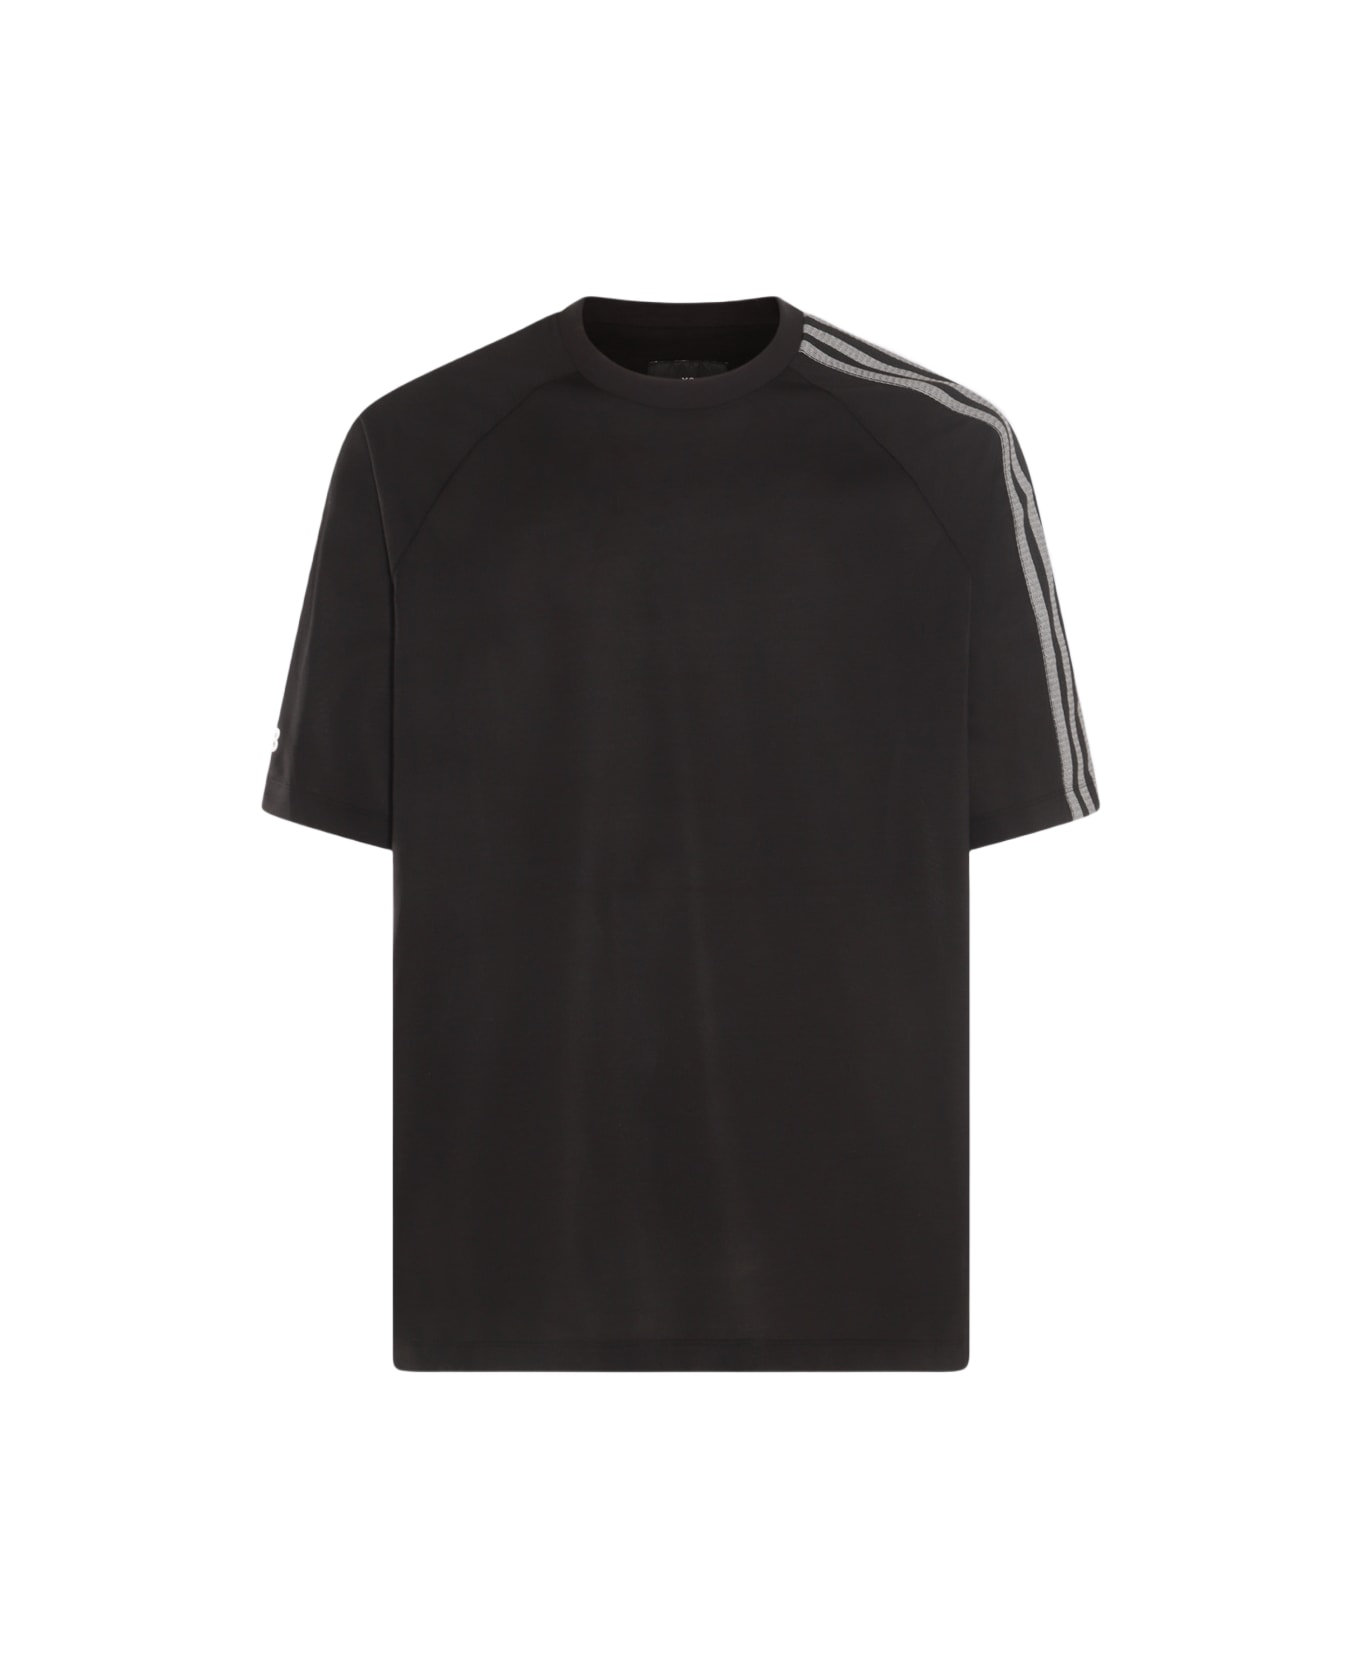 Y-3 Black And Grey Cotton T-shirt - Black Tシャツ